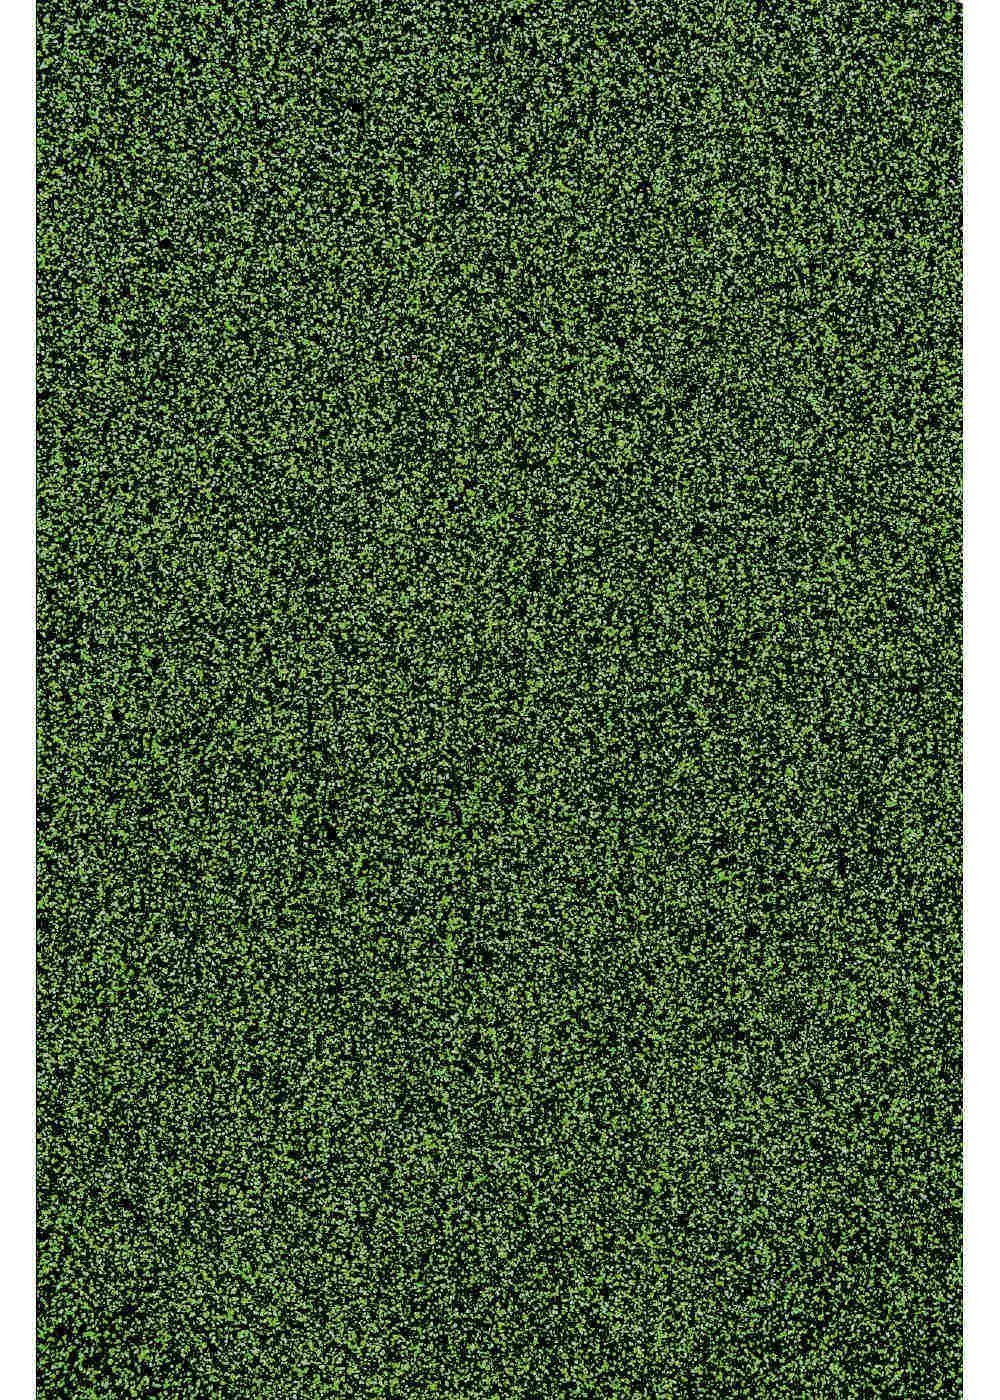 Hilltop Transparentpapier Glitzer Transferfolie/Textilfolie zum Aufbügeln, perfekt zum Plottern Dark Green